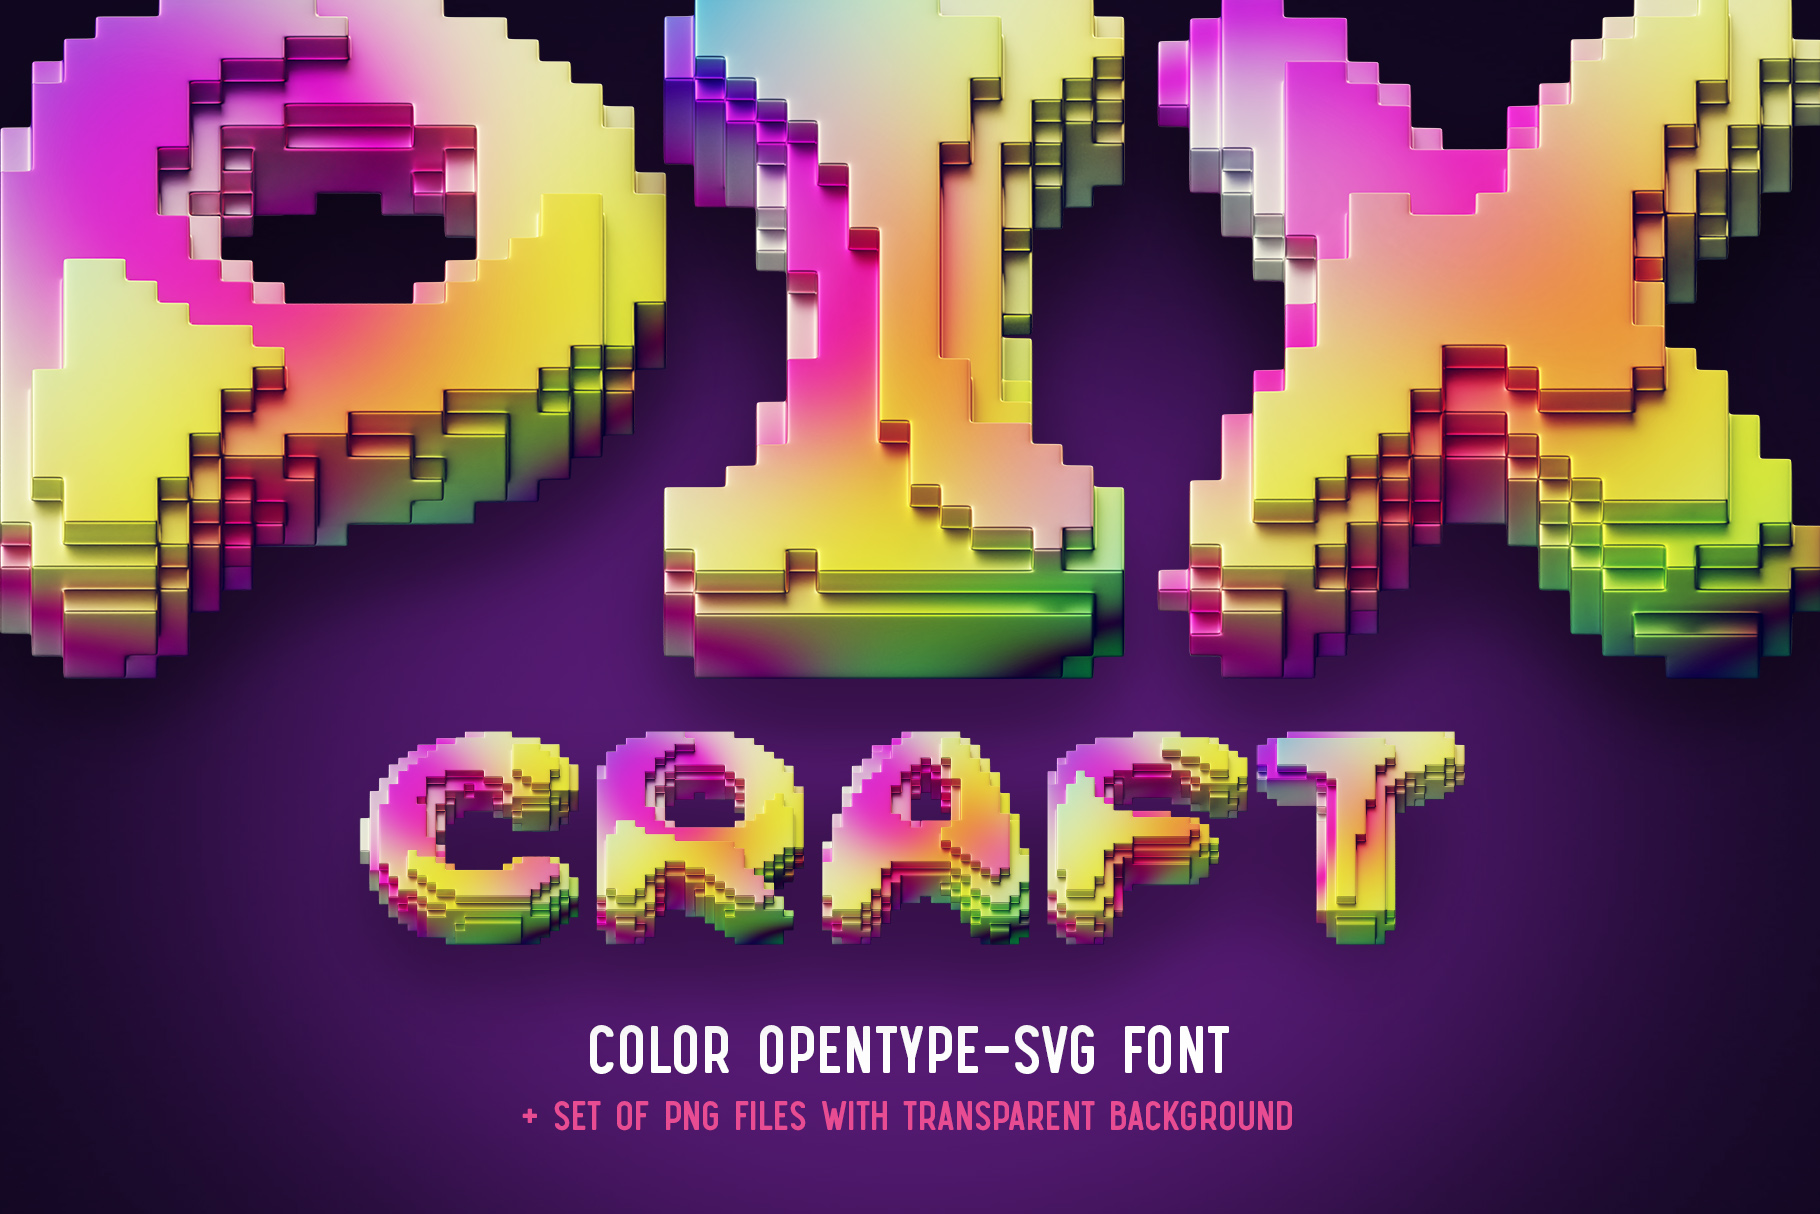 Pixcraft – Color Bitmap Font facebook image.